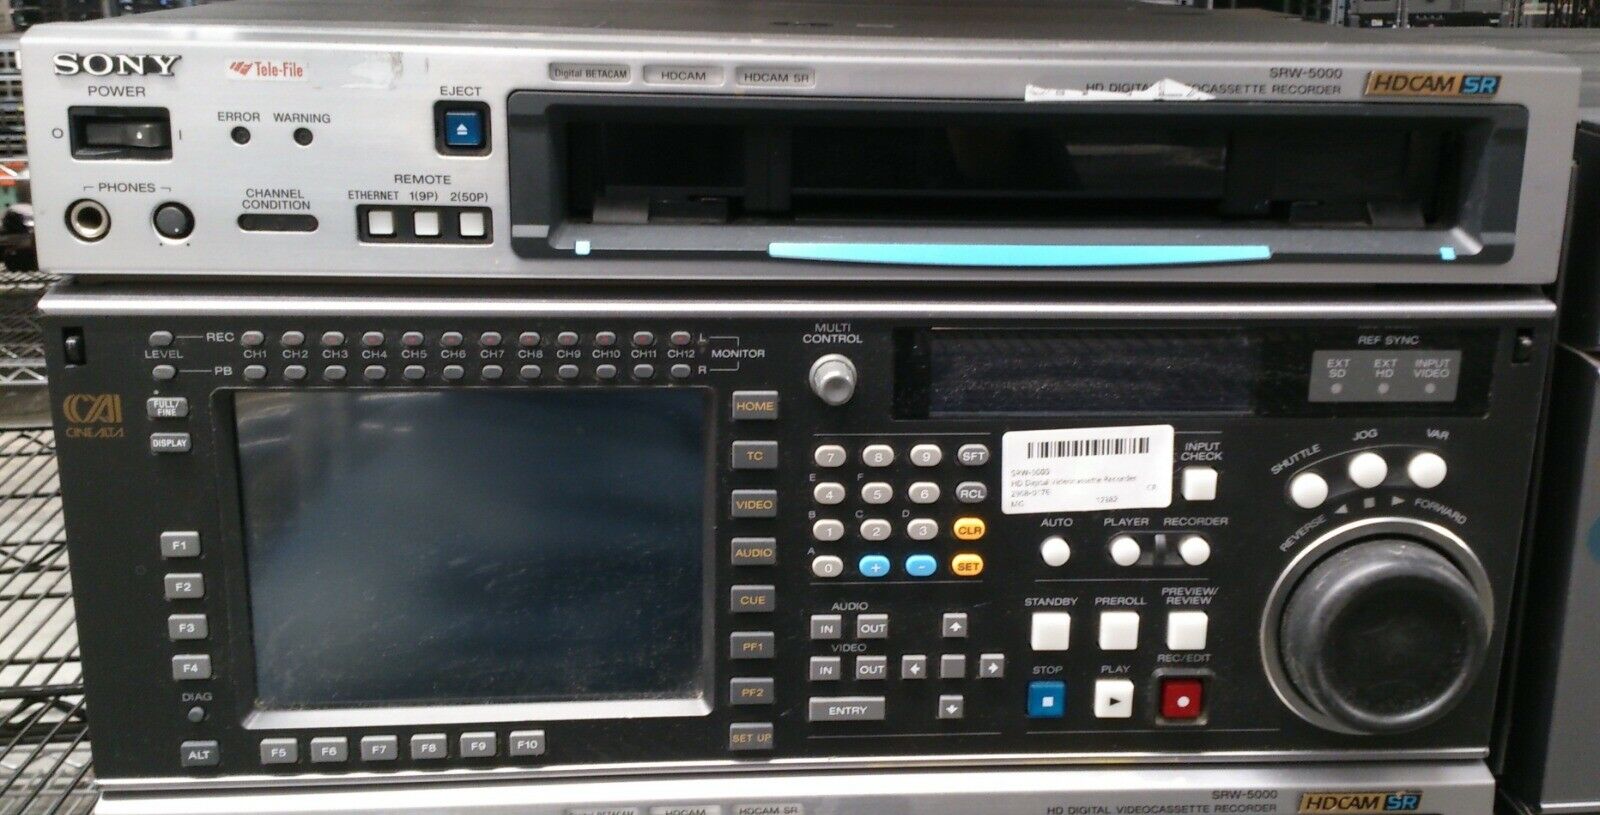 Sony Srw-5000 Hd Digital Videocassette Recorder 8326 Drum Hours